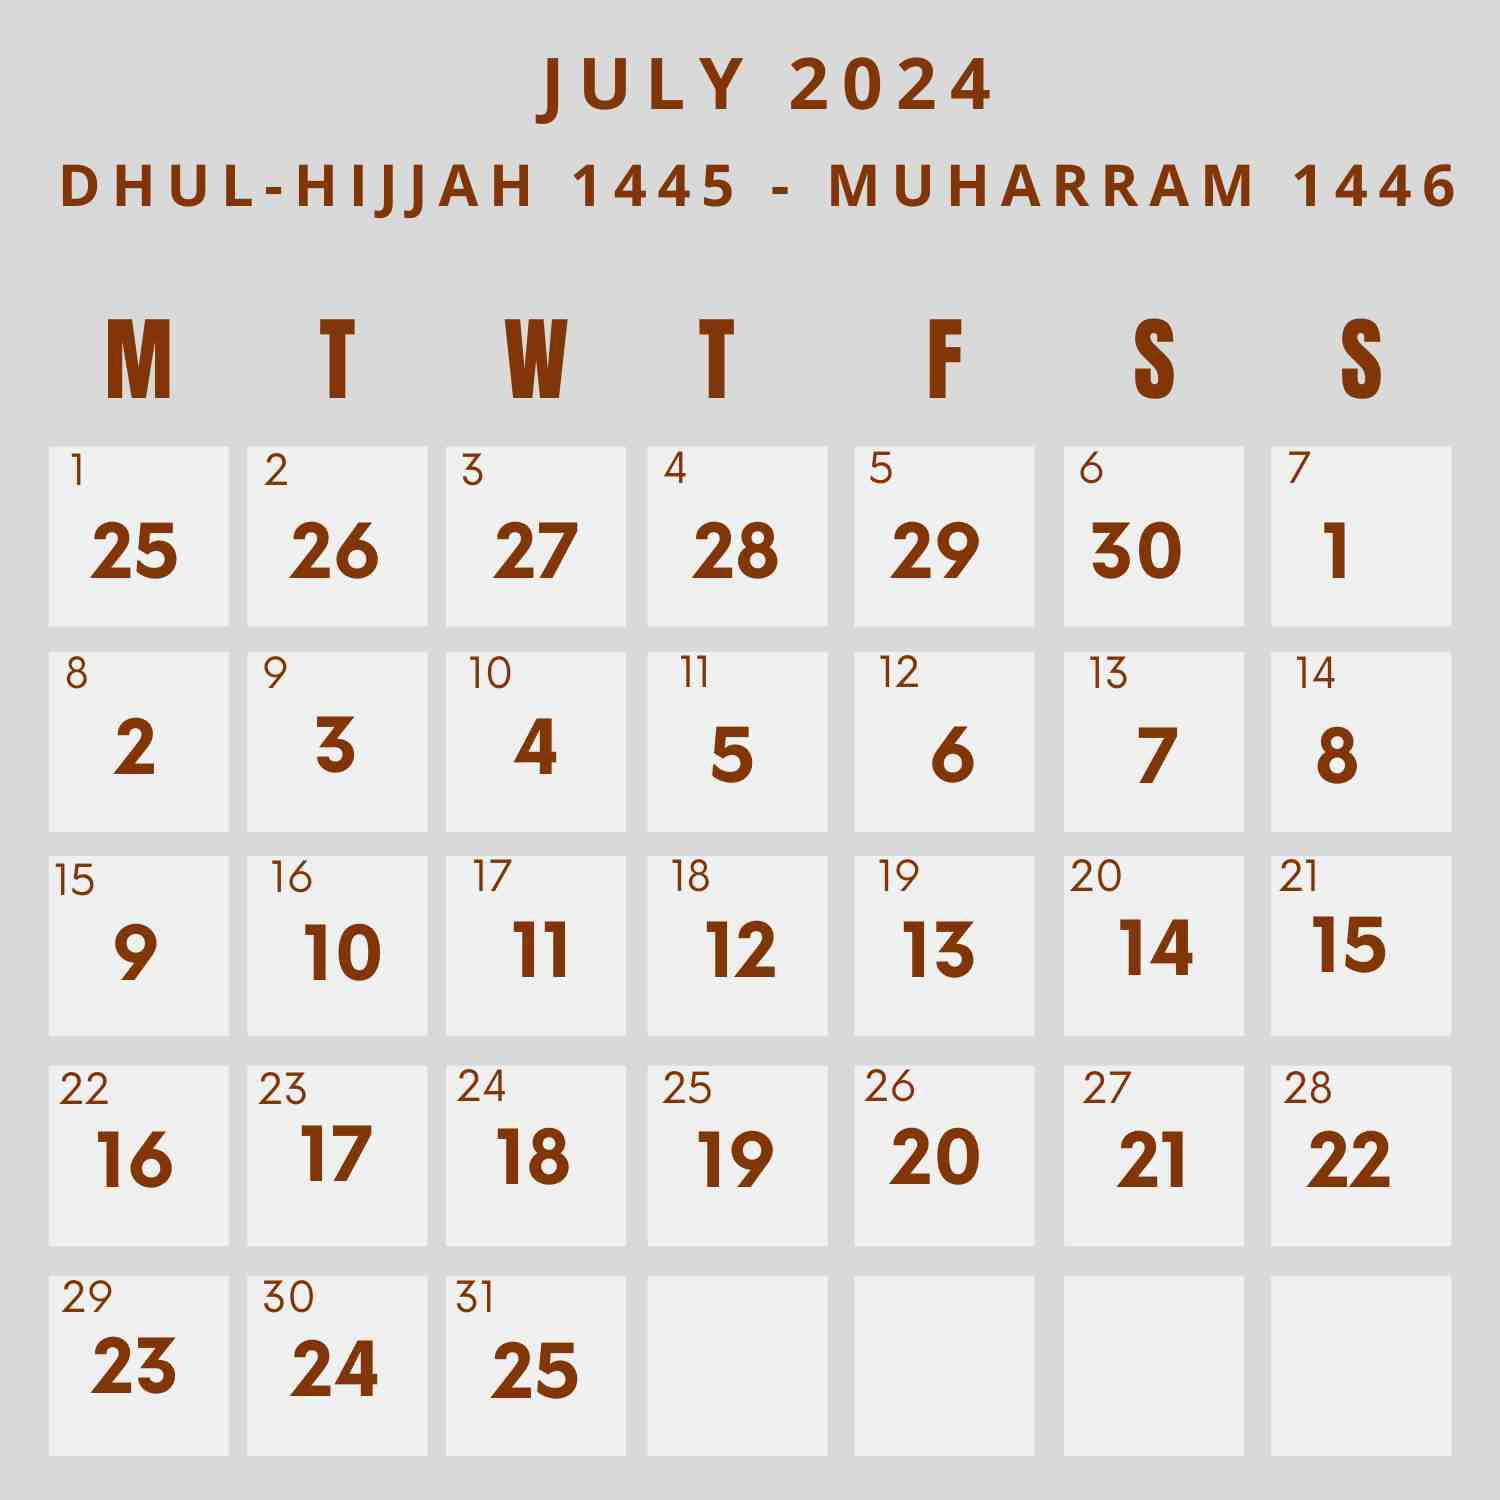 Islamic Calendar 2024 - Khwajadarbar regarding 10 July 2024 in Islamic Calendar